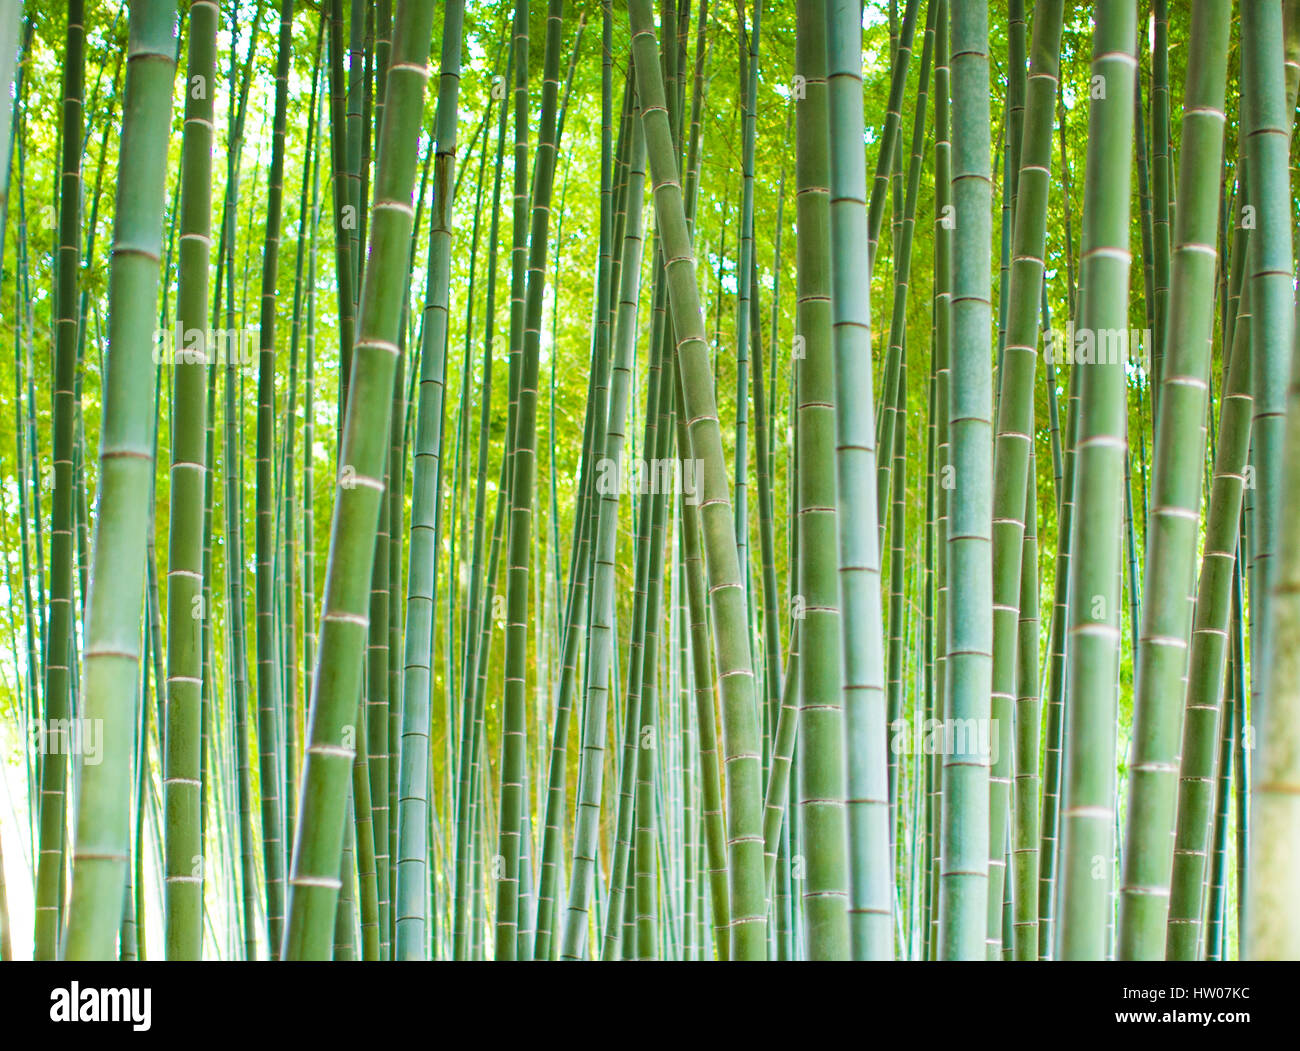 Bamboo Groves, bamboo forest in Arashiyama, Kyoto Japan. Stock Photo